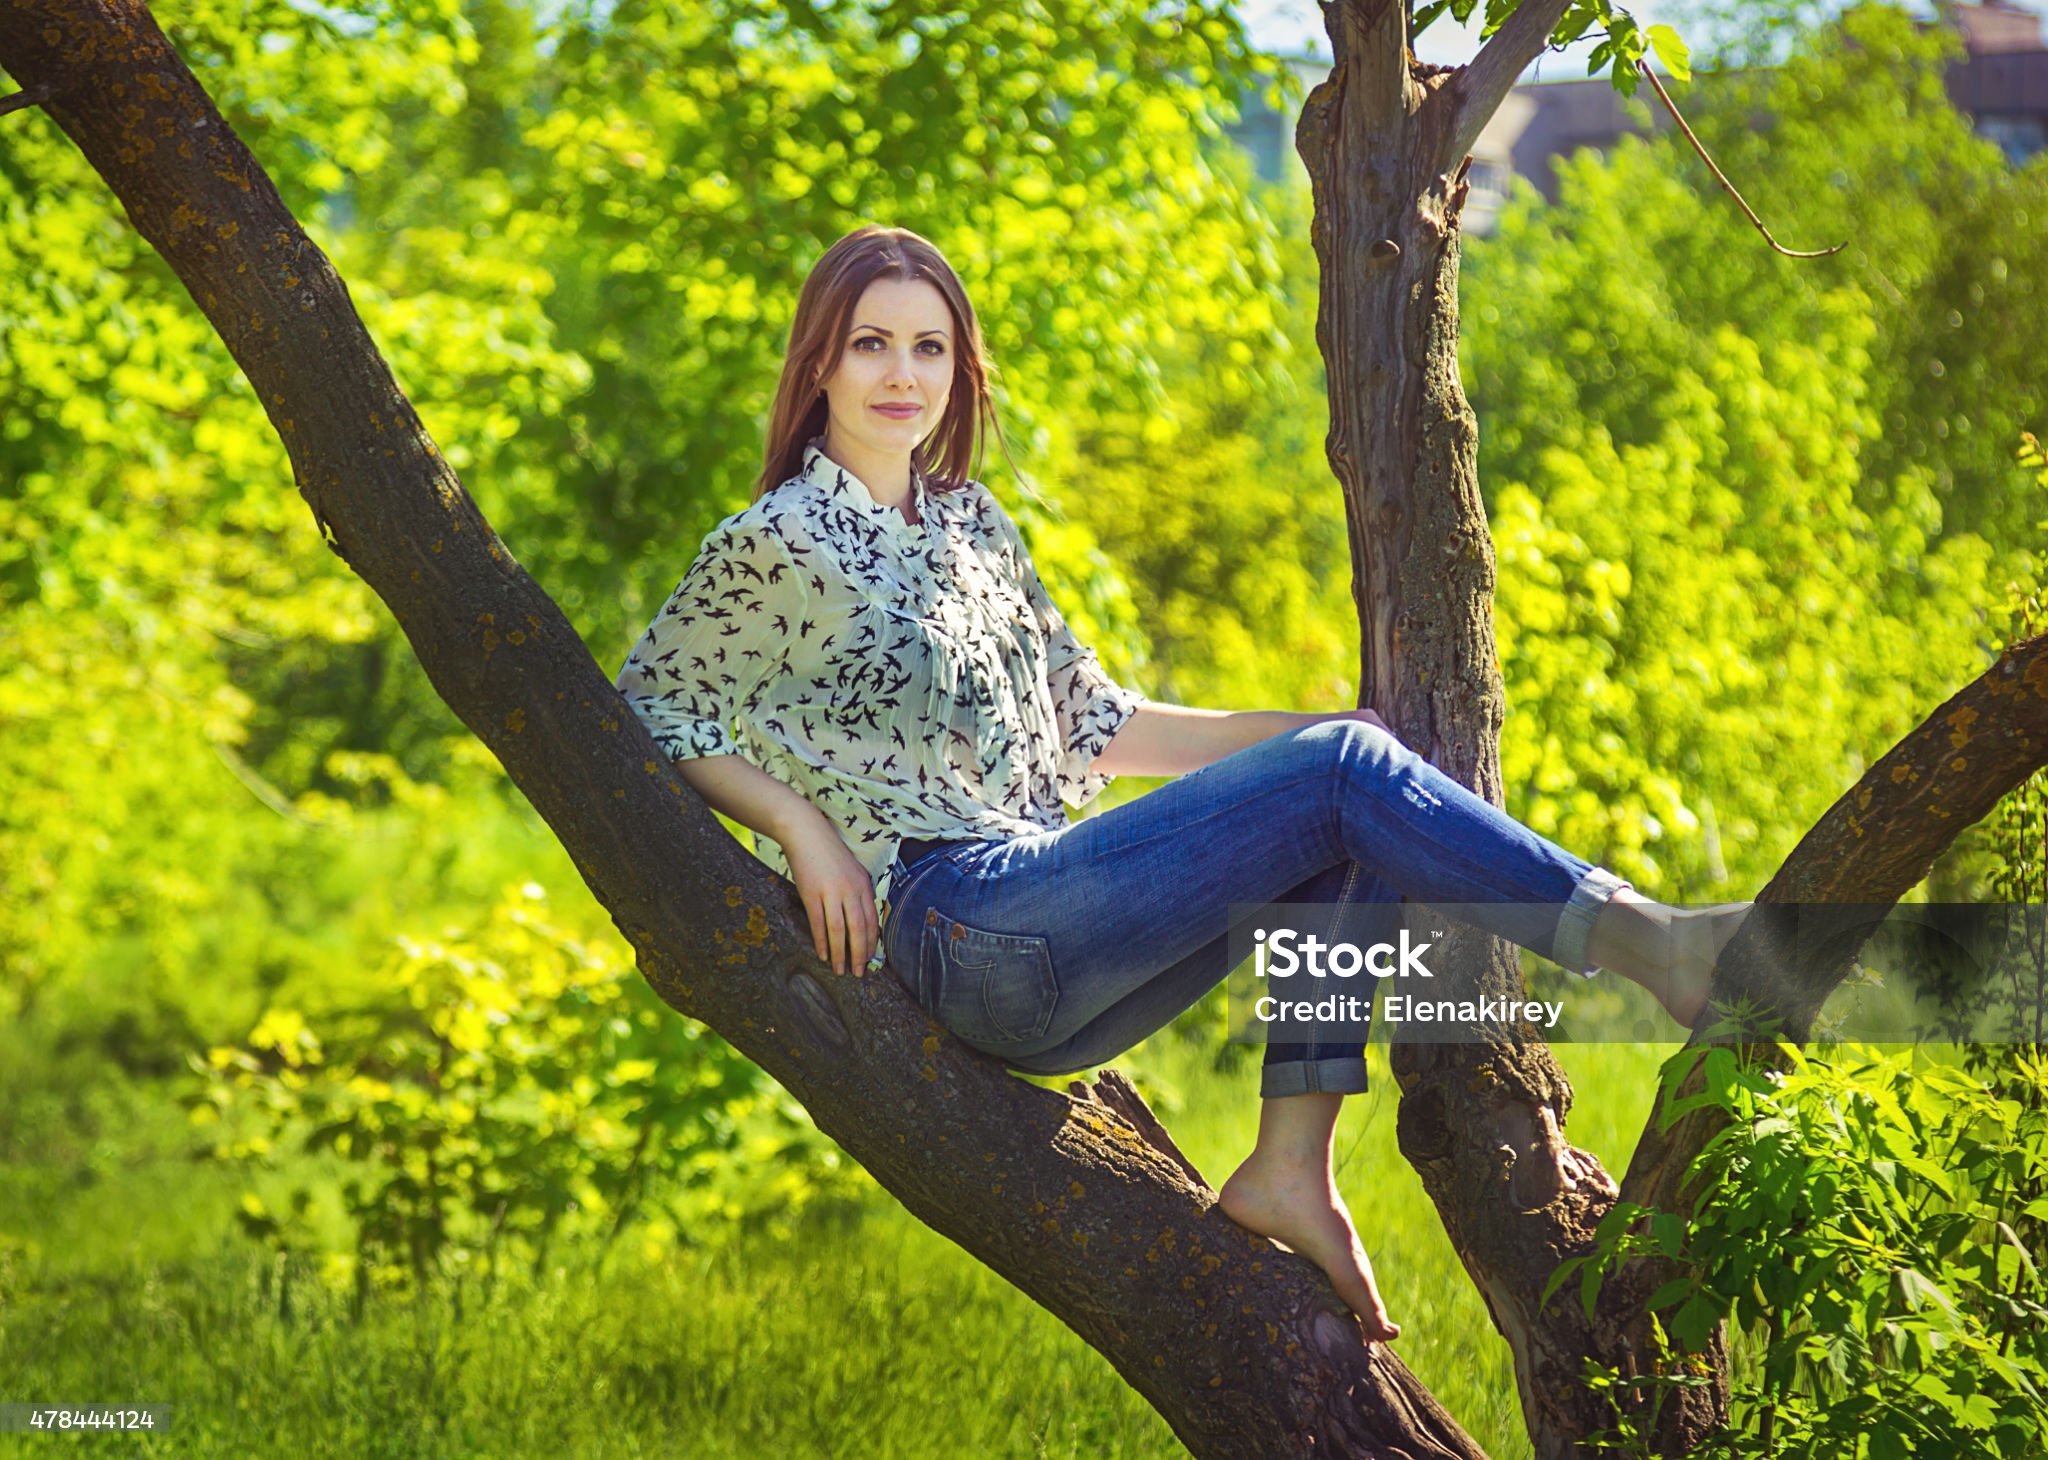 https://media.istockphoto.com/id/478444124/photo/woman-sitting-on-the-tree-branch.jpg?s=2048x2048&amp;w=is&amp;k=20&amp;c=TsyyA3pviaEkM47wHZ_m3ciXJvqoA1YO8PxgWKnOwXw=